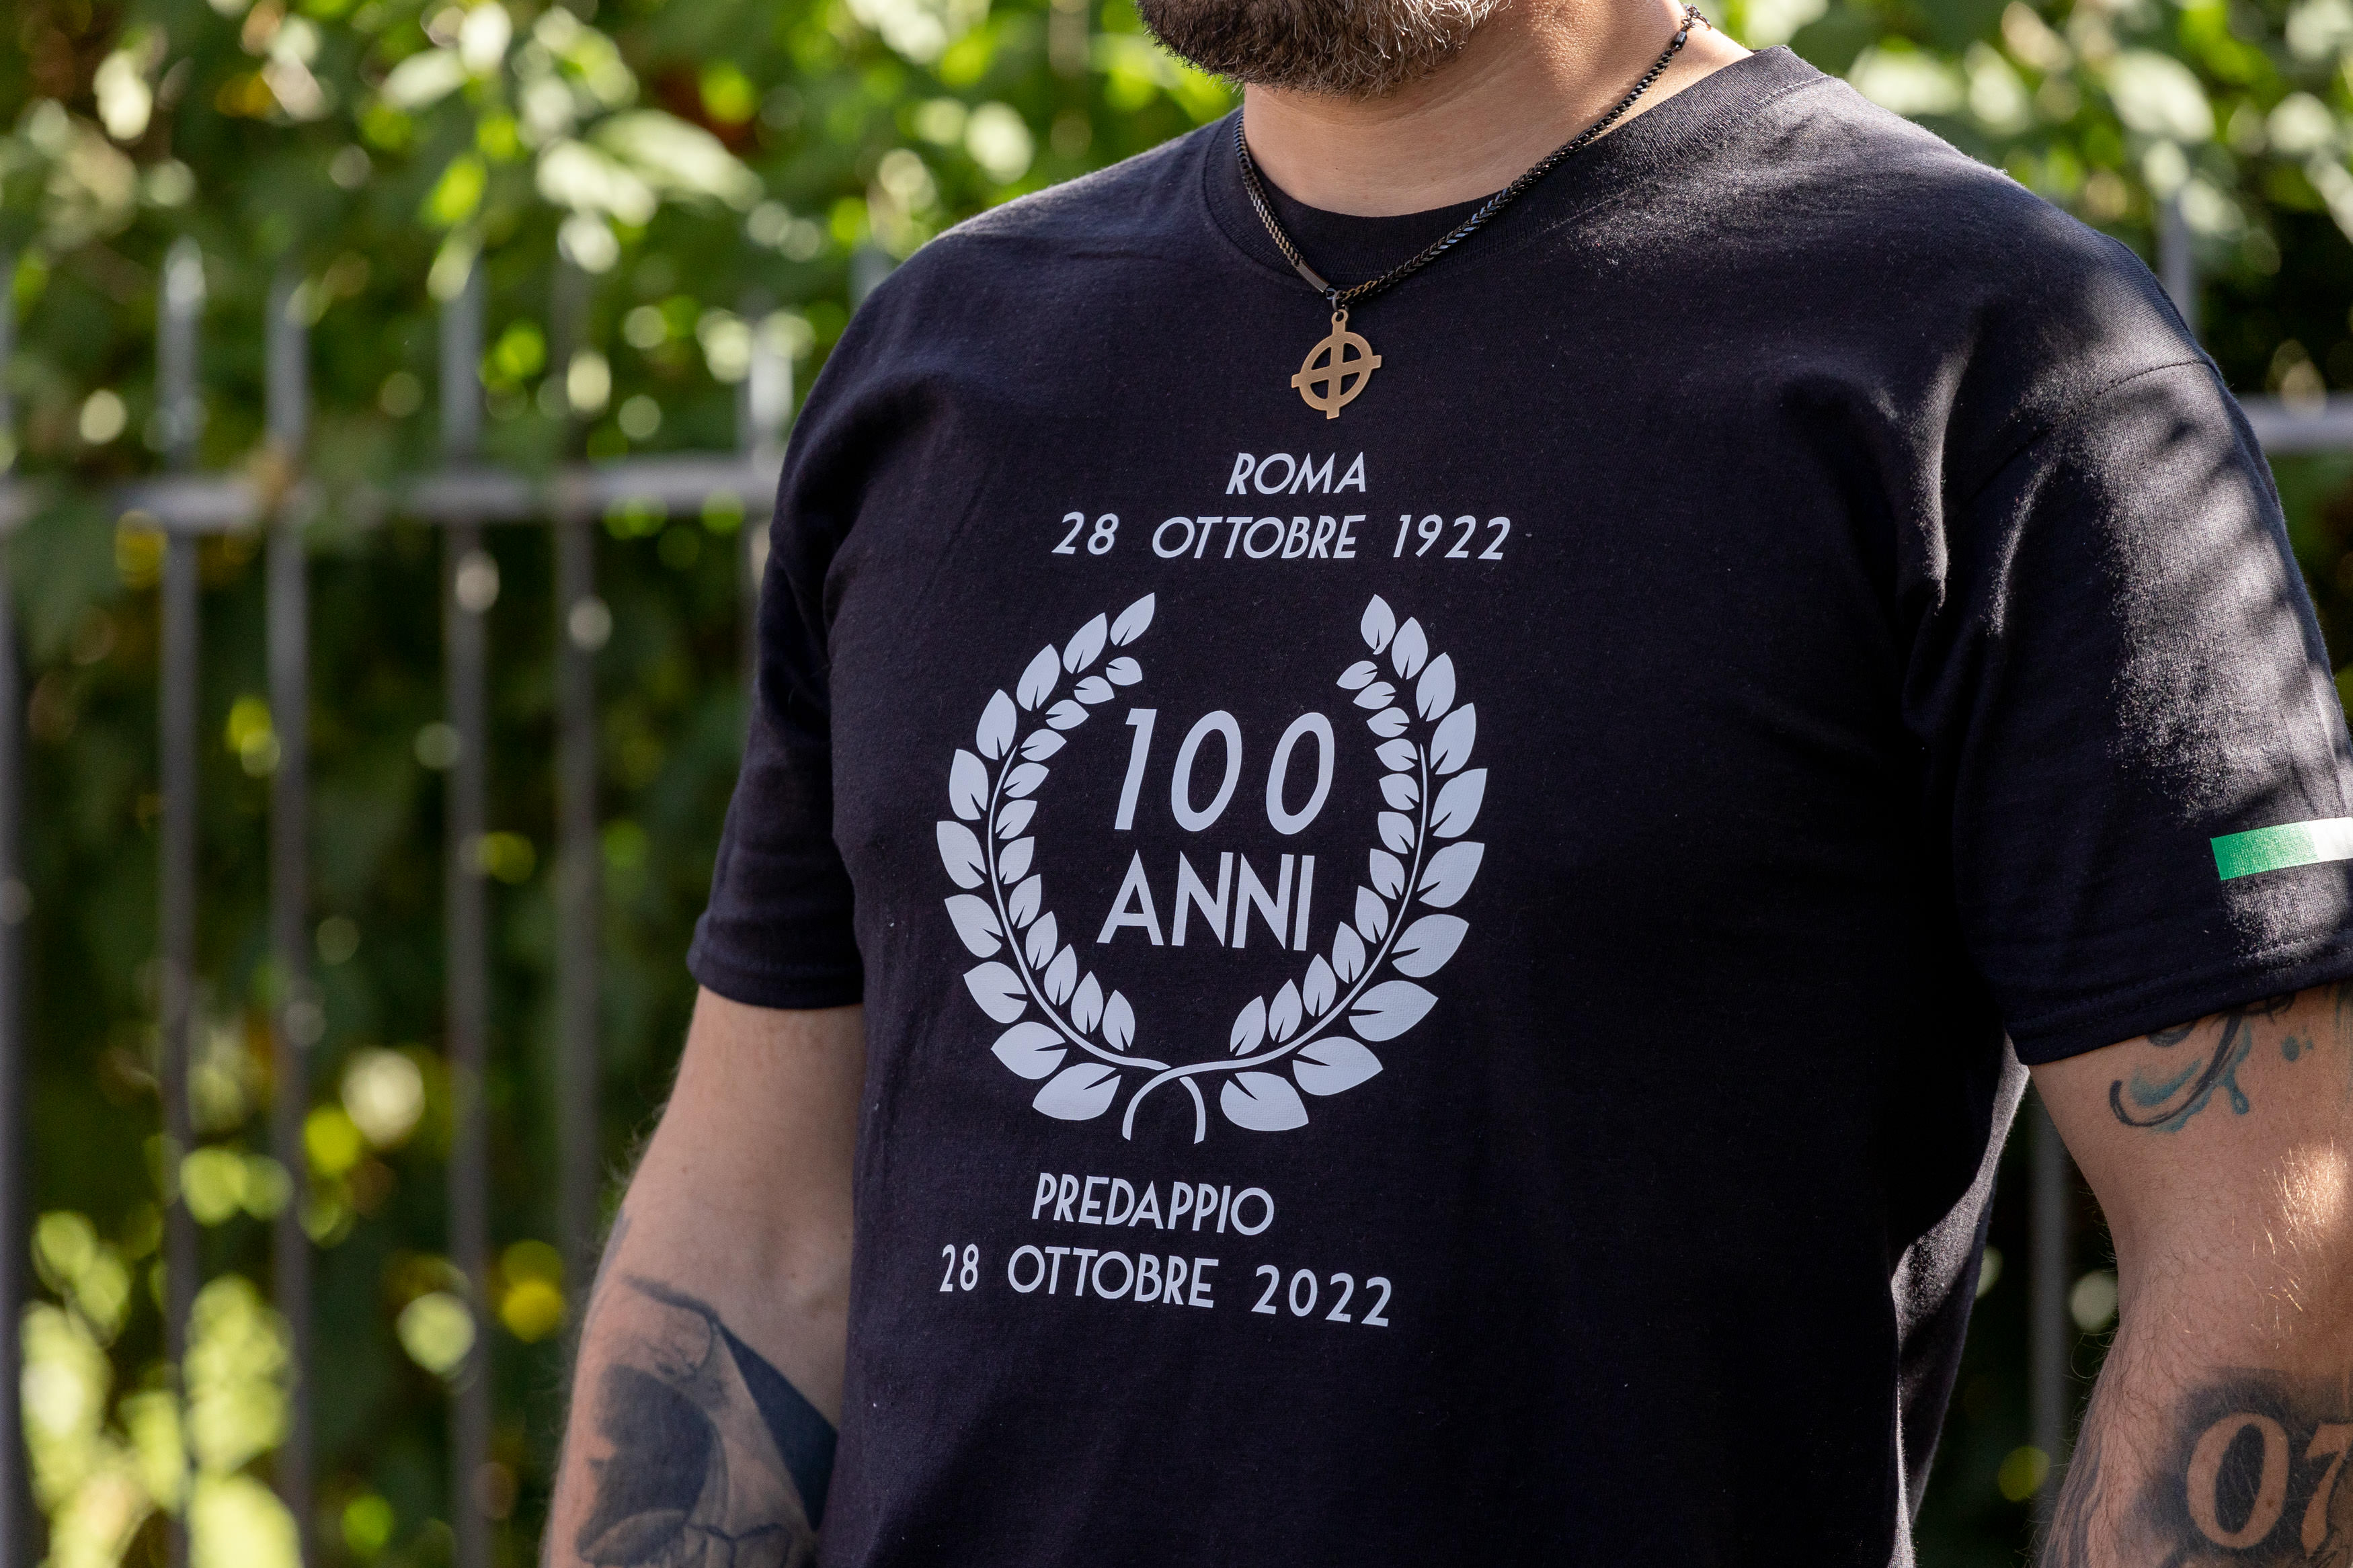 Kaus hitam bertuliskan “Roma, Octobe 28, 1922 - 100 Years - Predappio, October 28, 2022”.